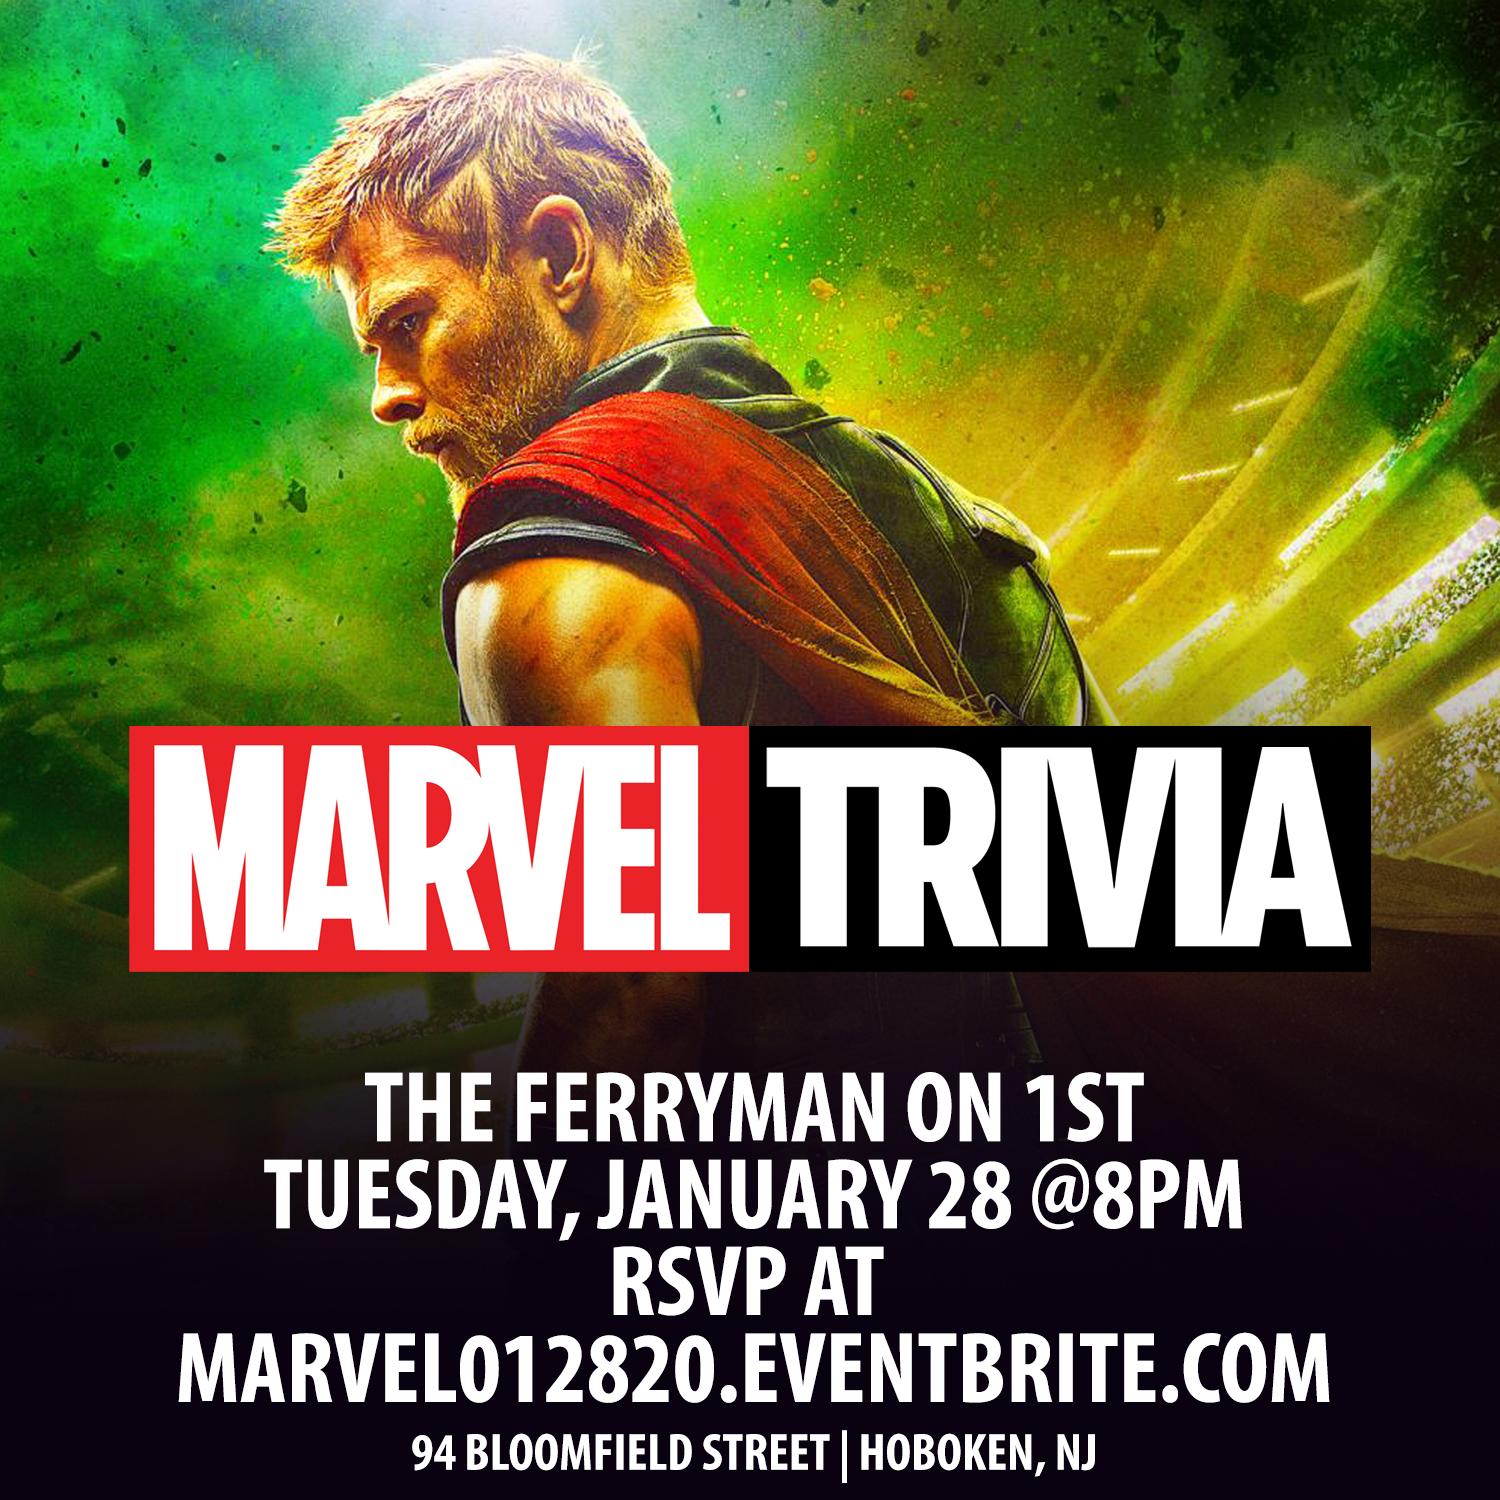 Marvel (Movie) Trivia